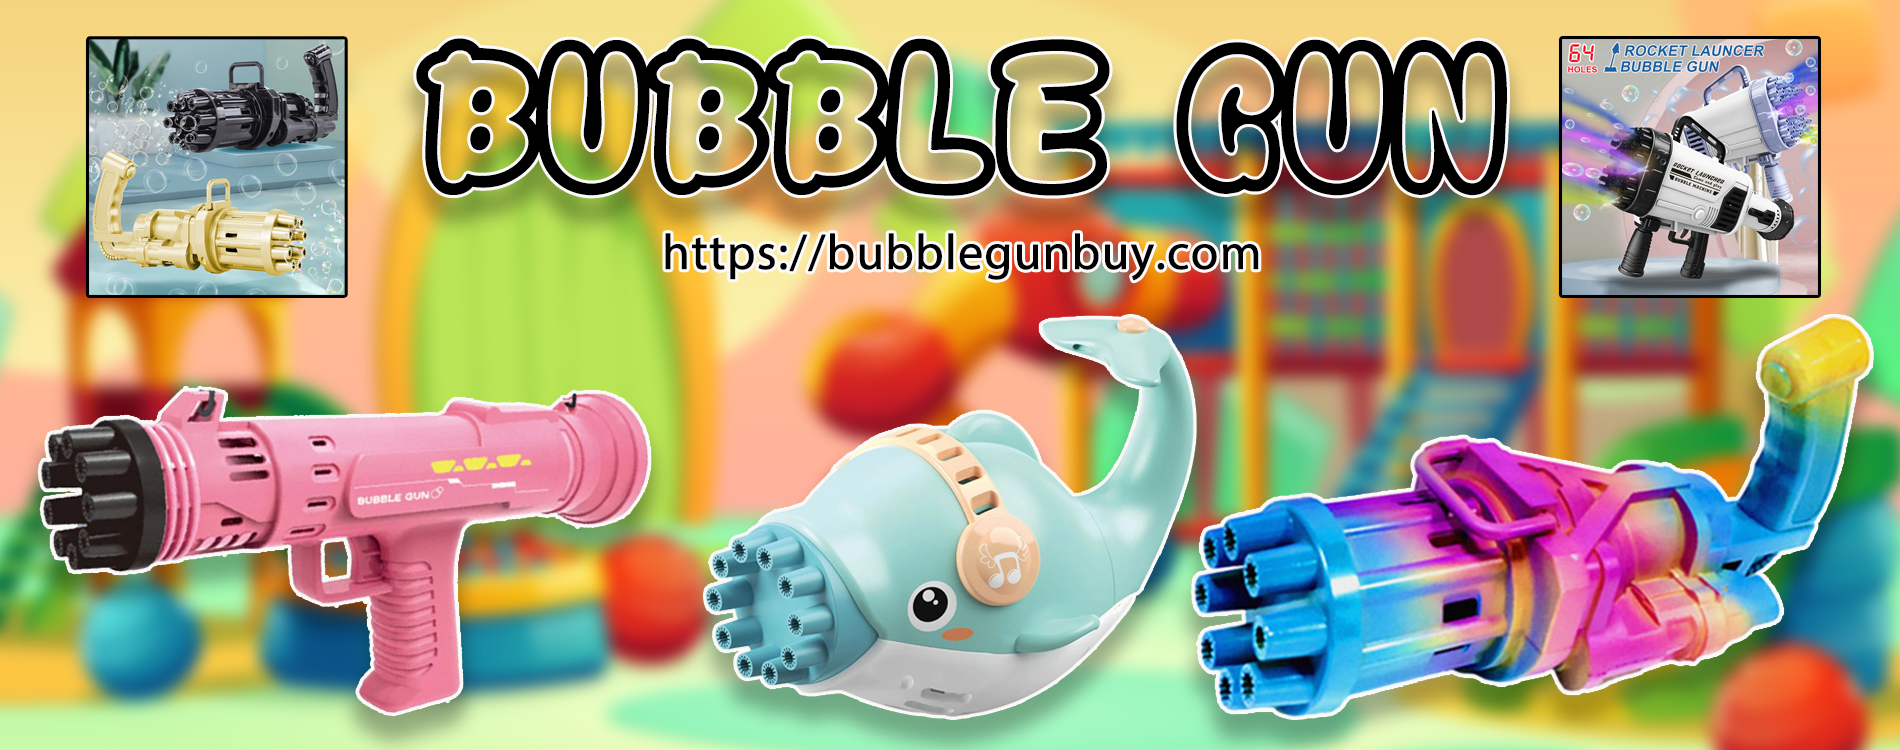 bubble gun banner 2 - Bubble Gun